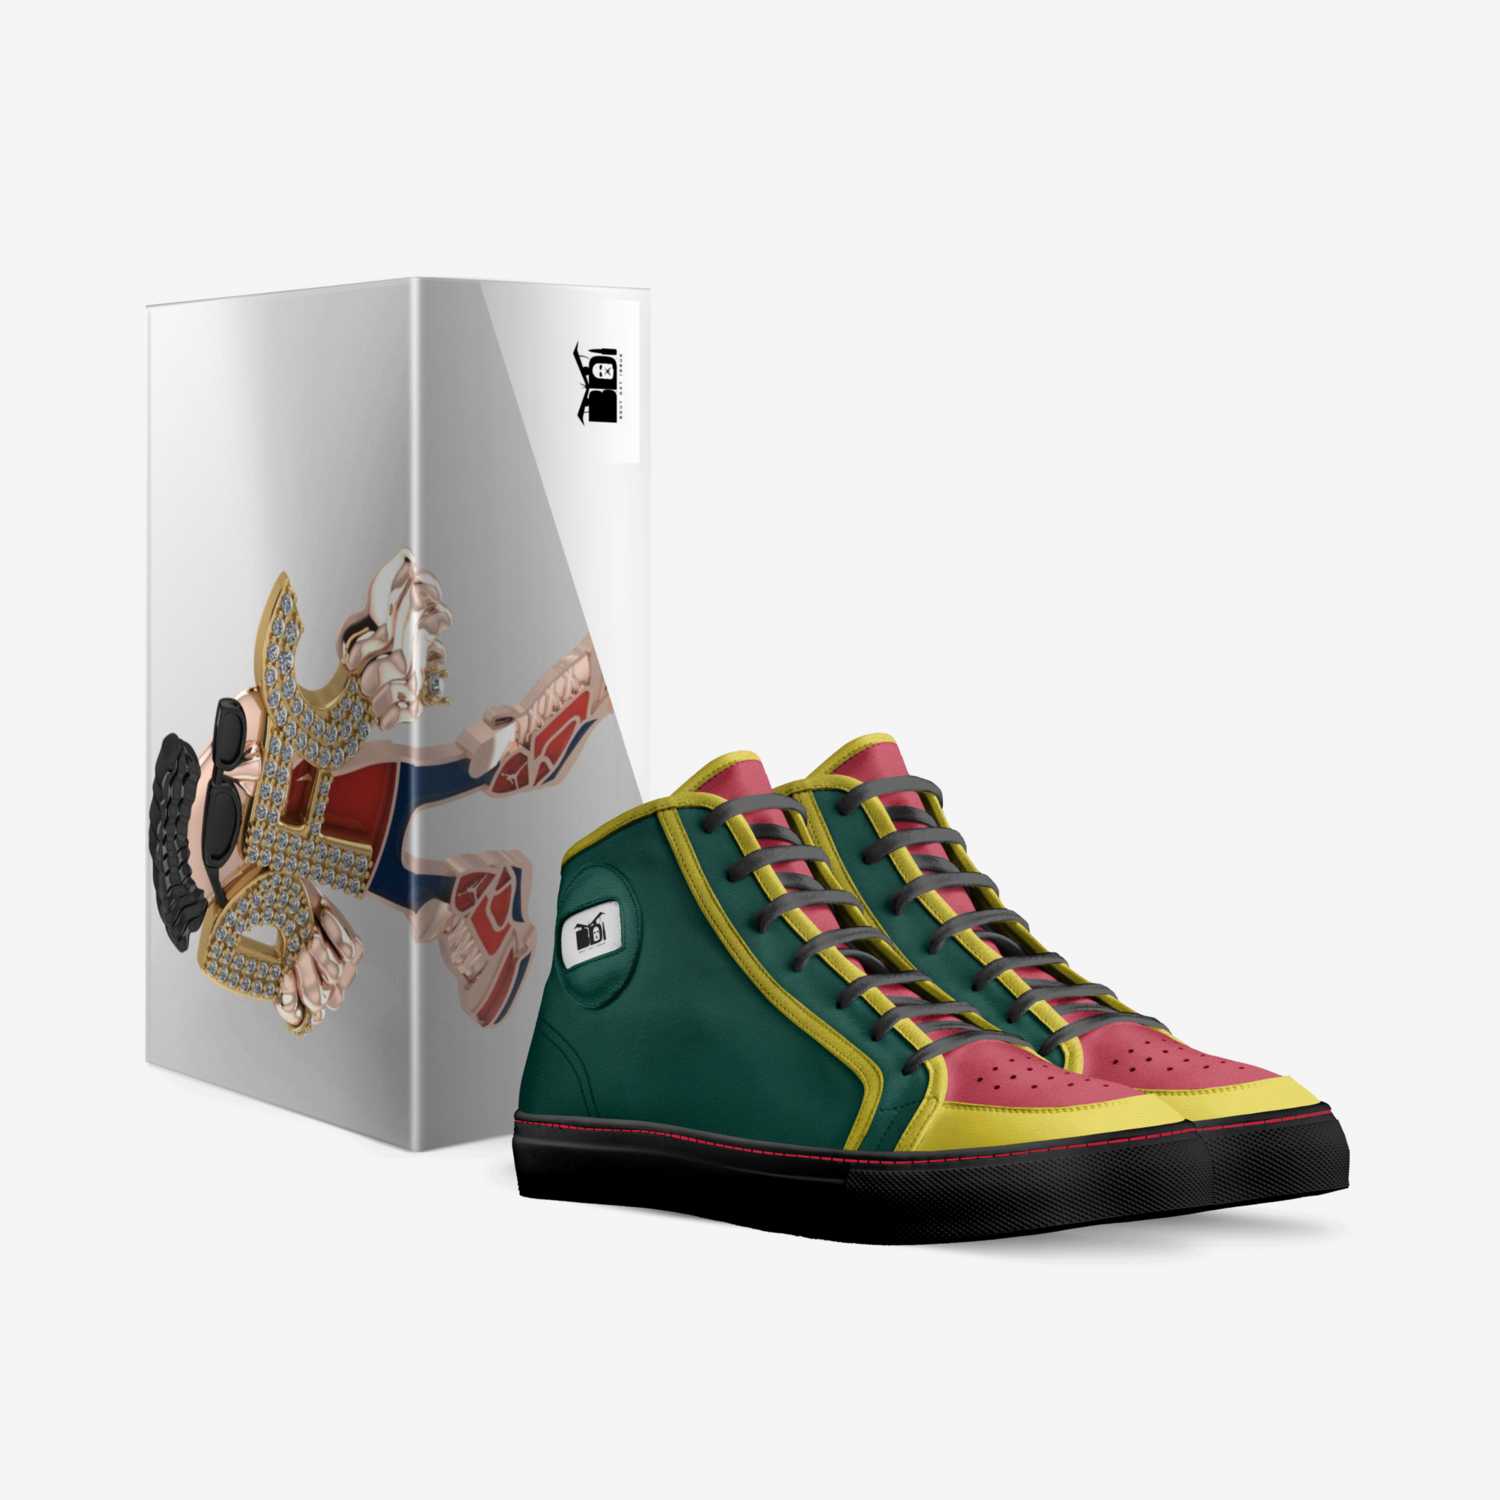 Yekcal custom made in Italy shoes by Duke Darilla | Box view